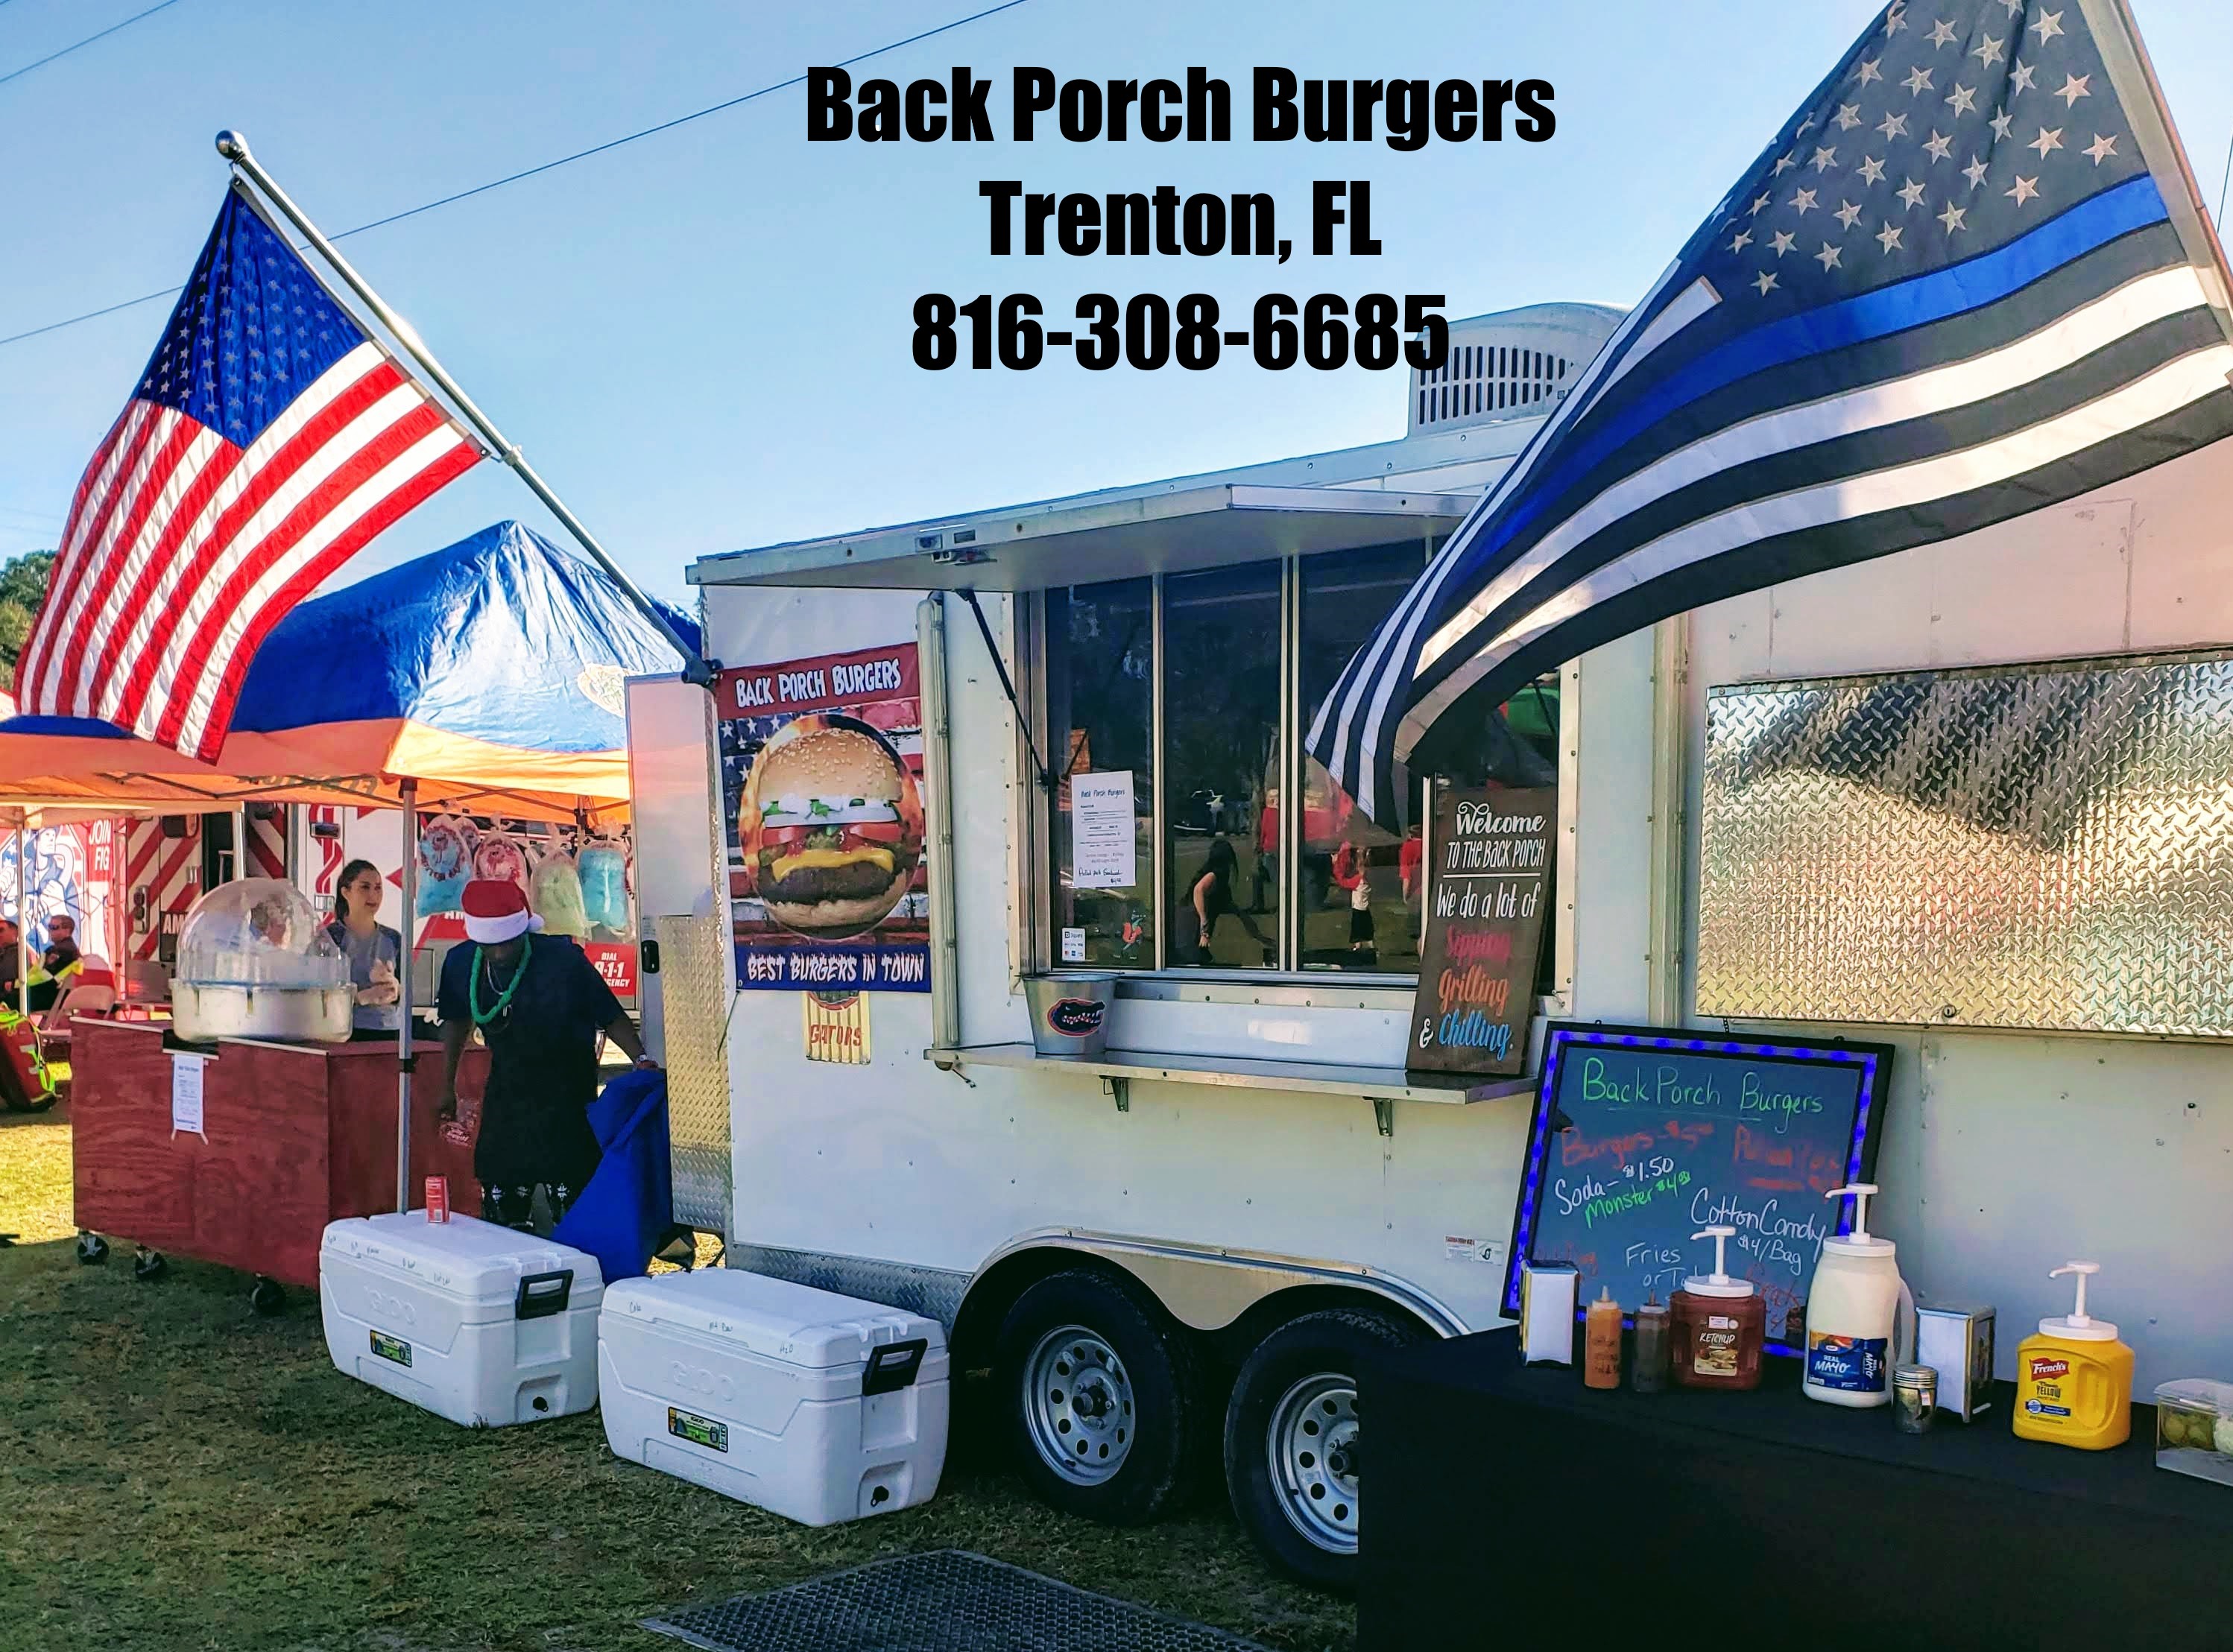 Back Porch Burgers food truck profile image